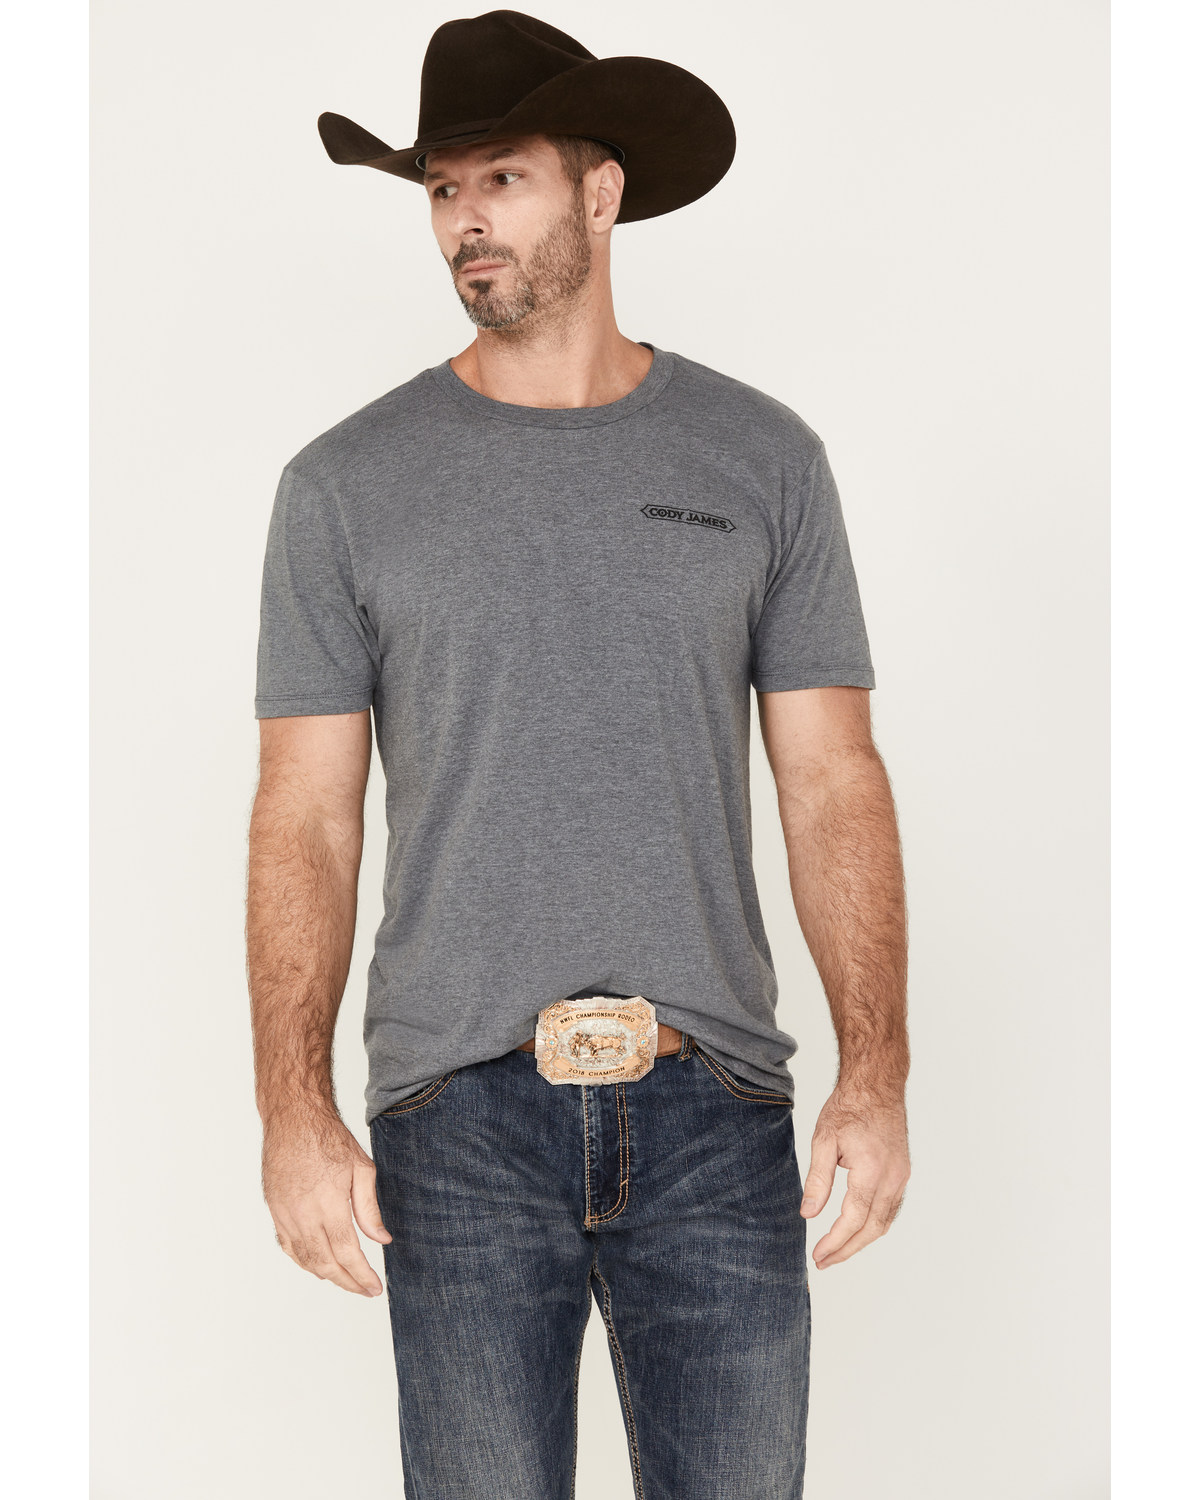 Cody James Men's Hard Headed Graphic Short Sleeve T-Shirt